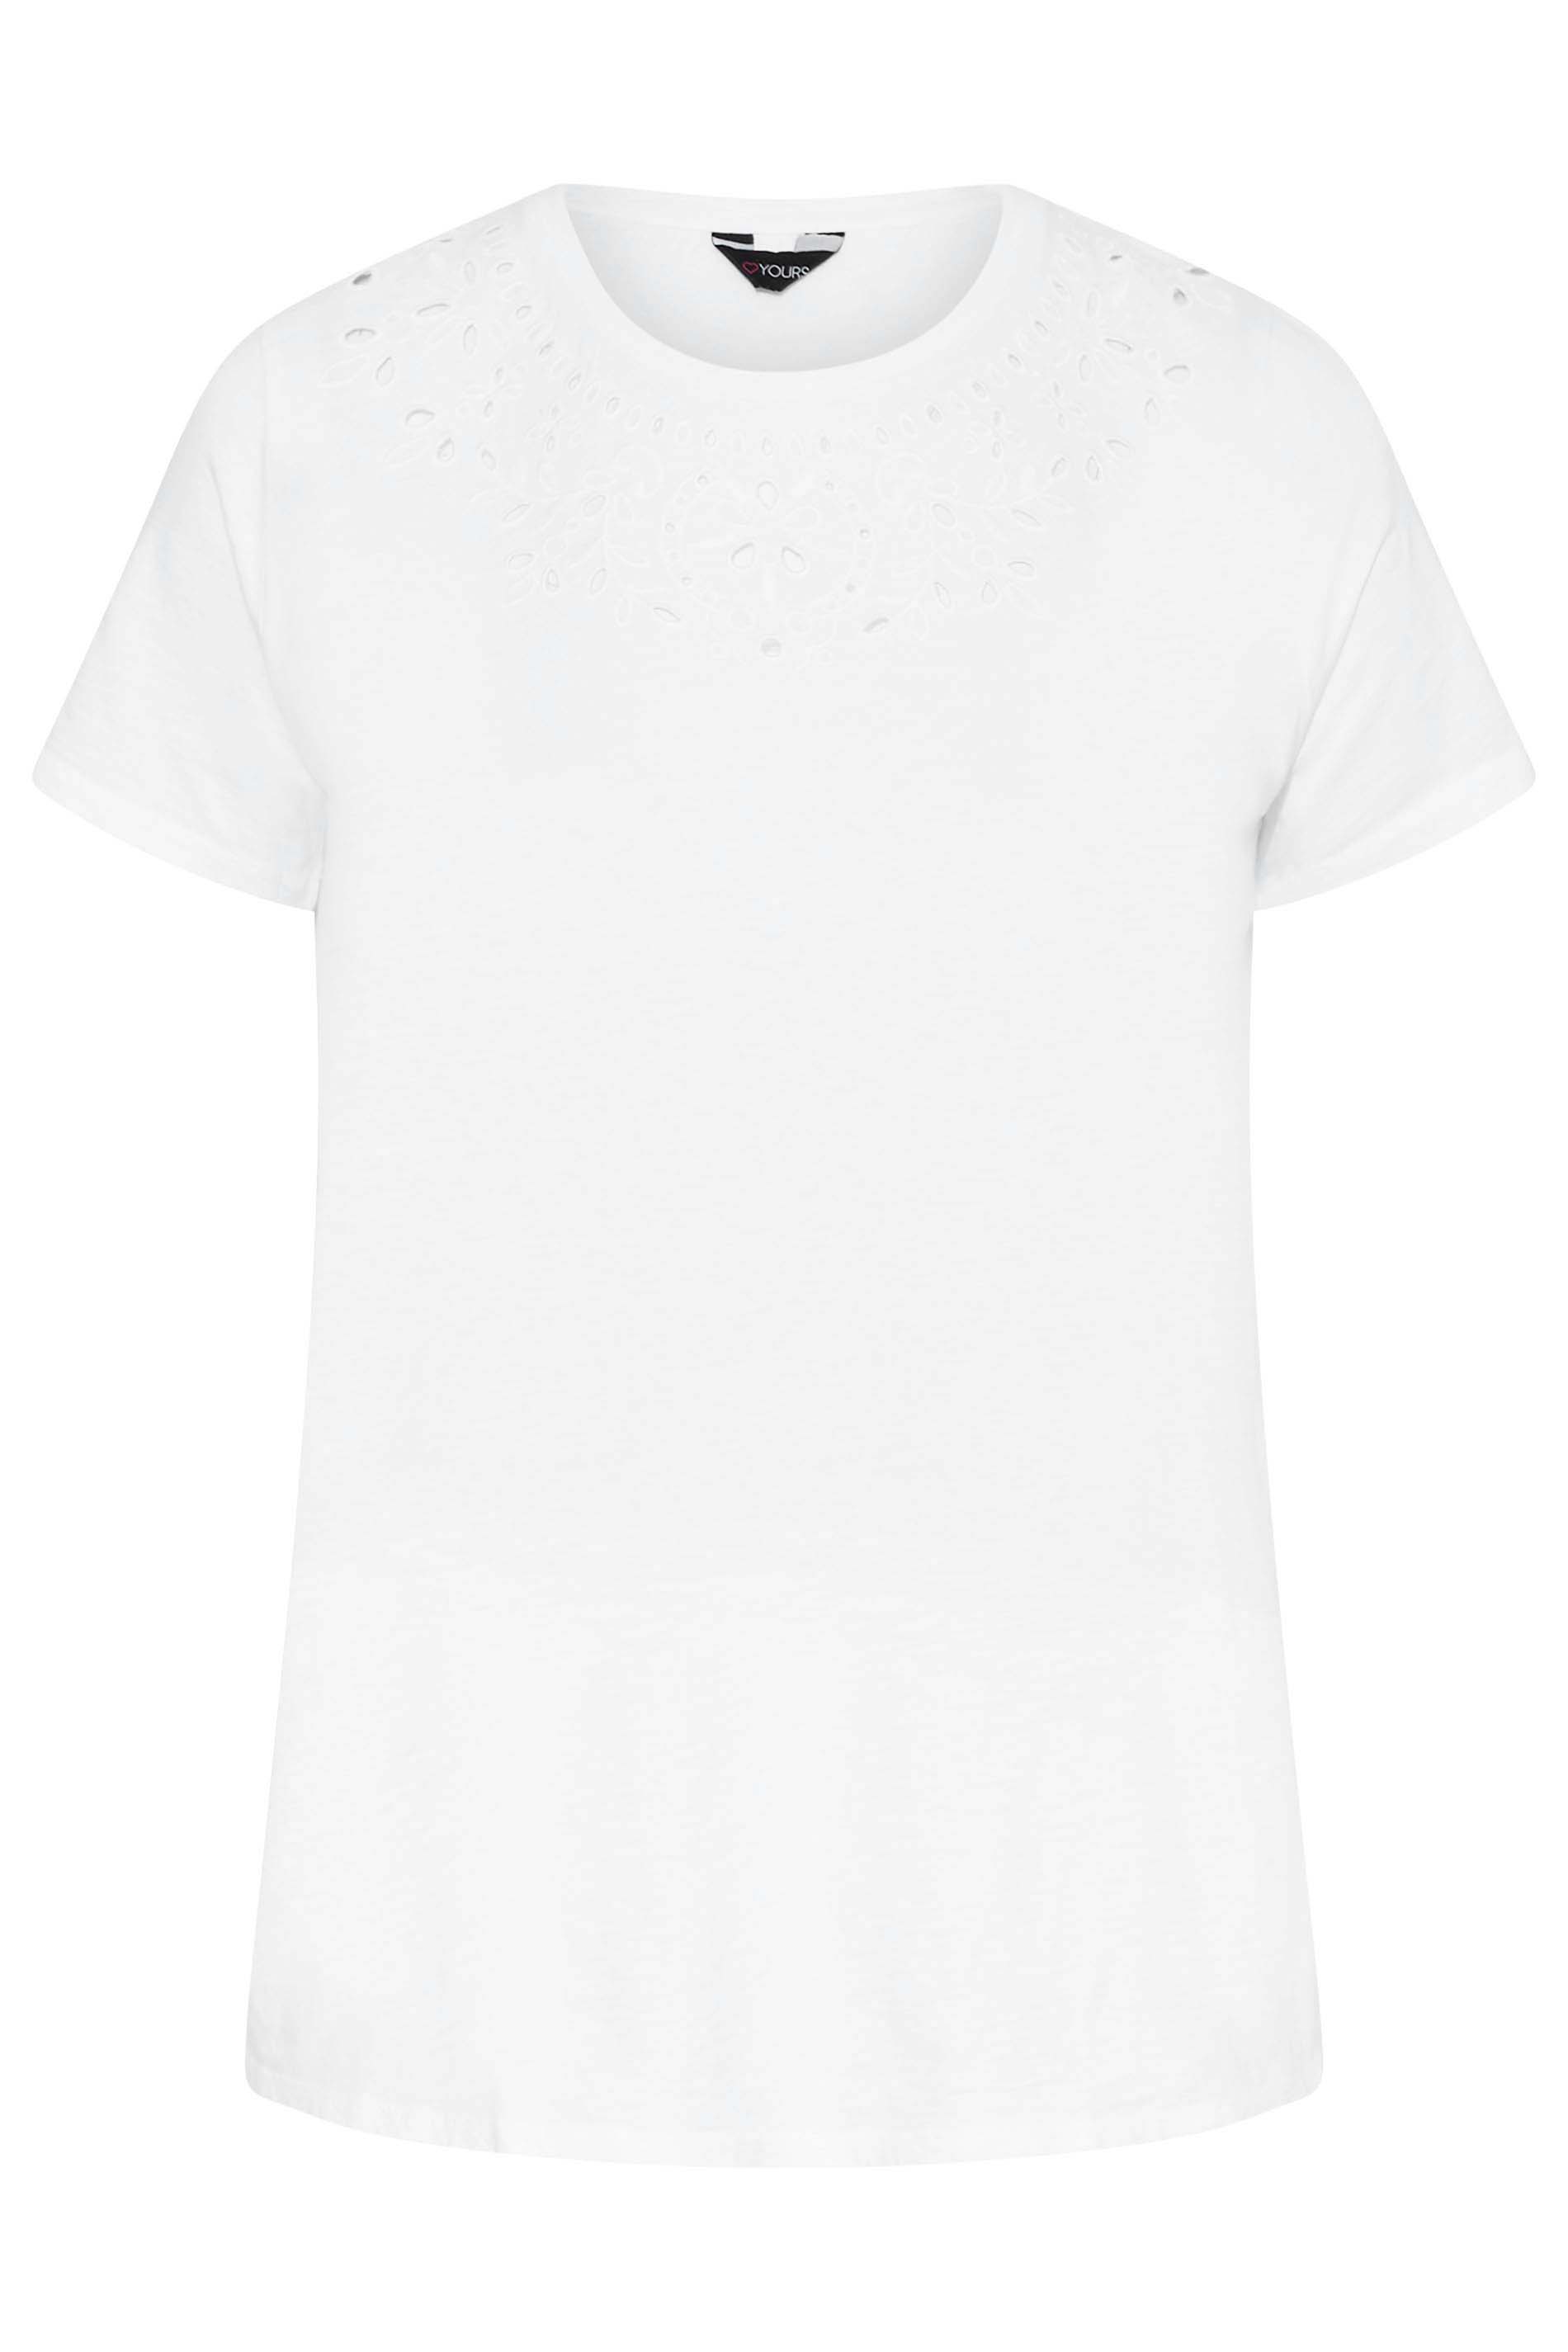 Grande taille  Tops Grande taille  Tops dÉté | Curve White Broderie Anglaise Neckline T-Shirt - GX86070